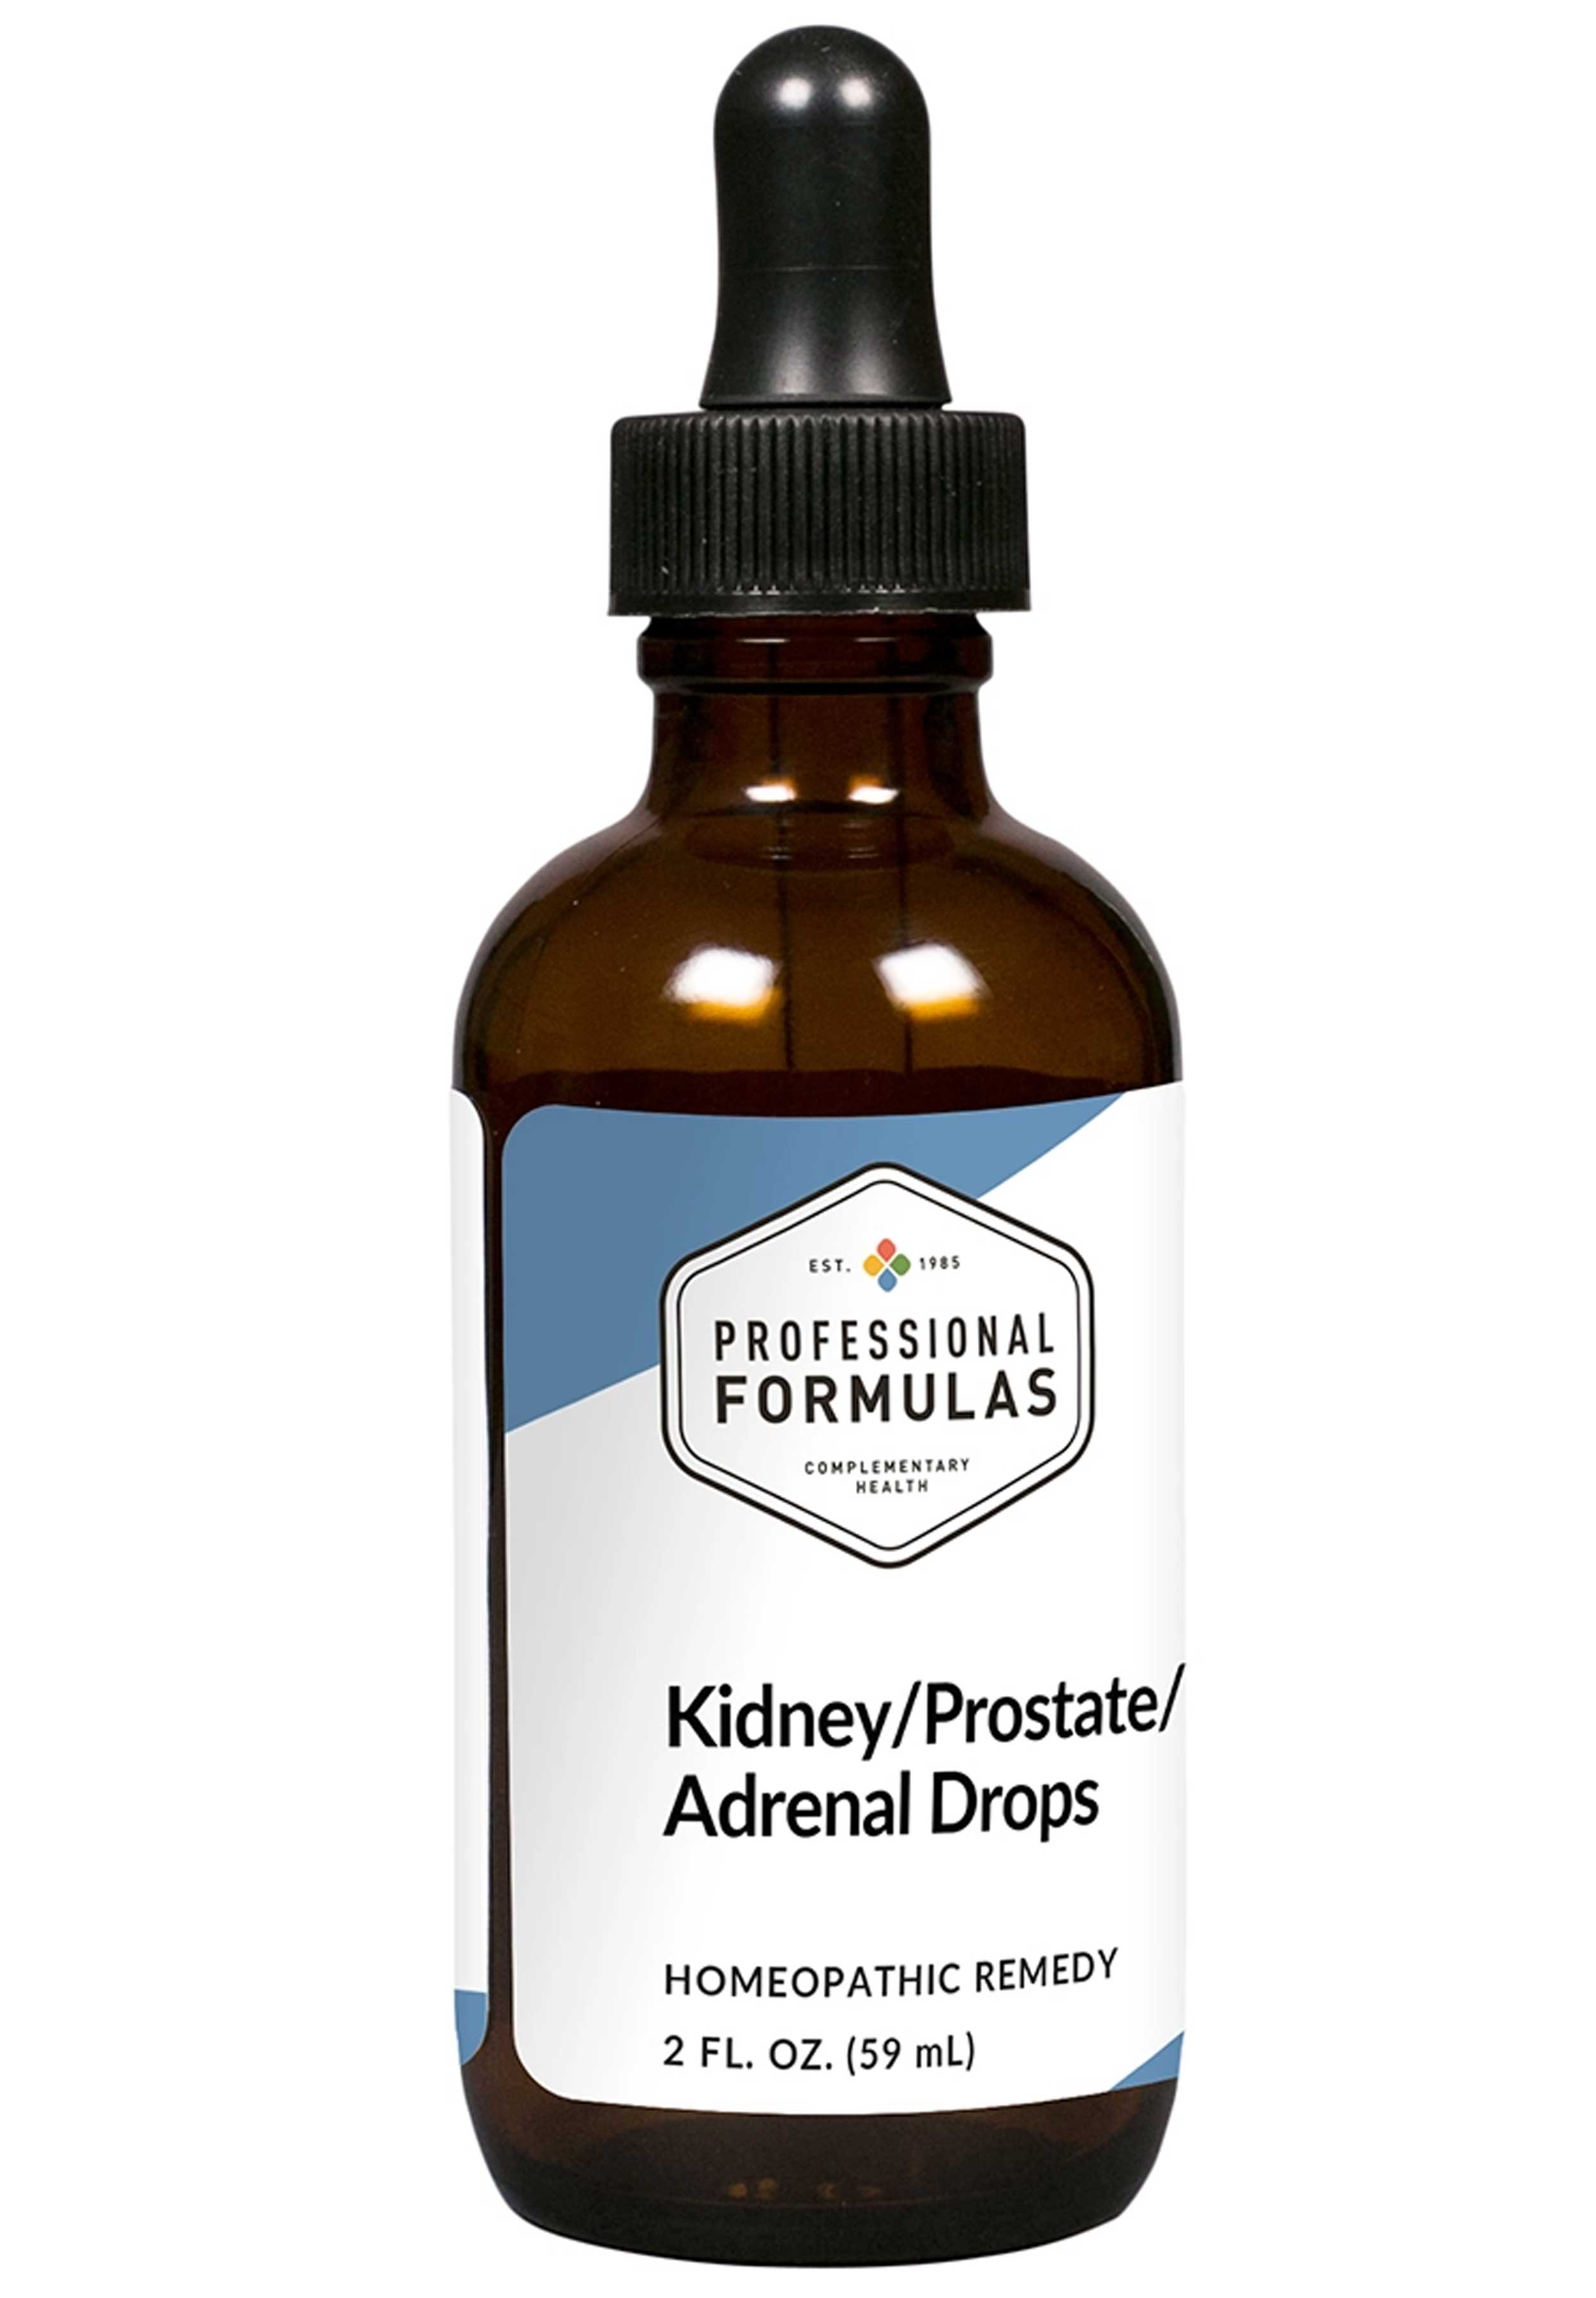 Professional Formulas Kidney Prostate Adrenal Drops